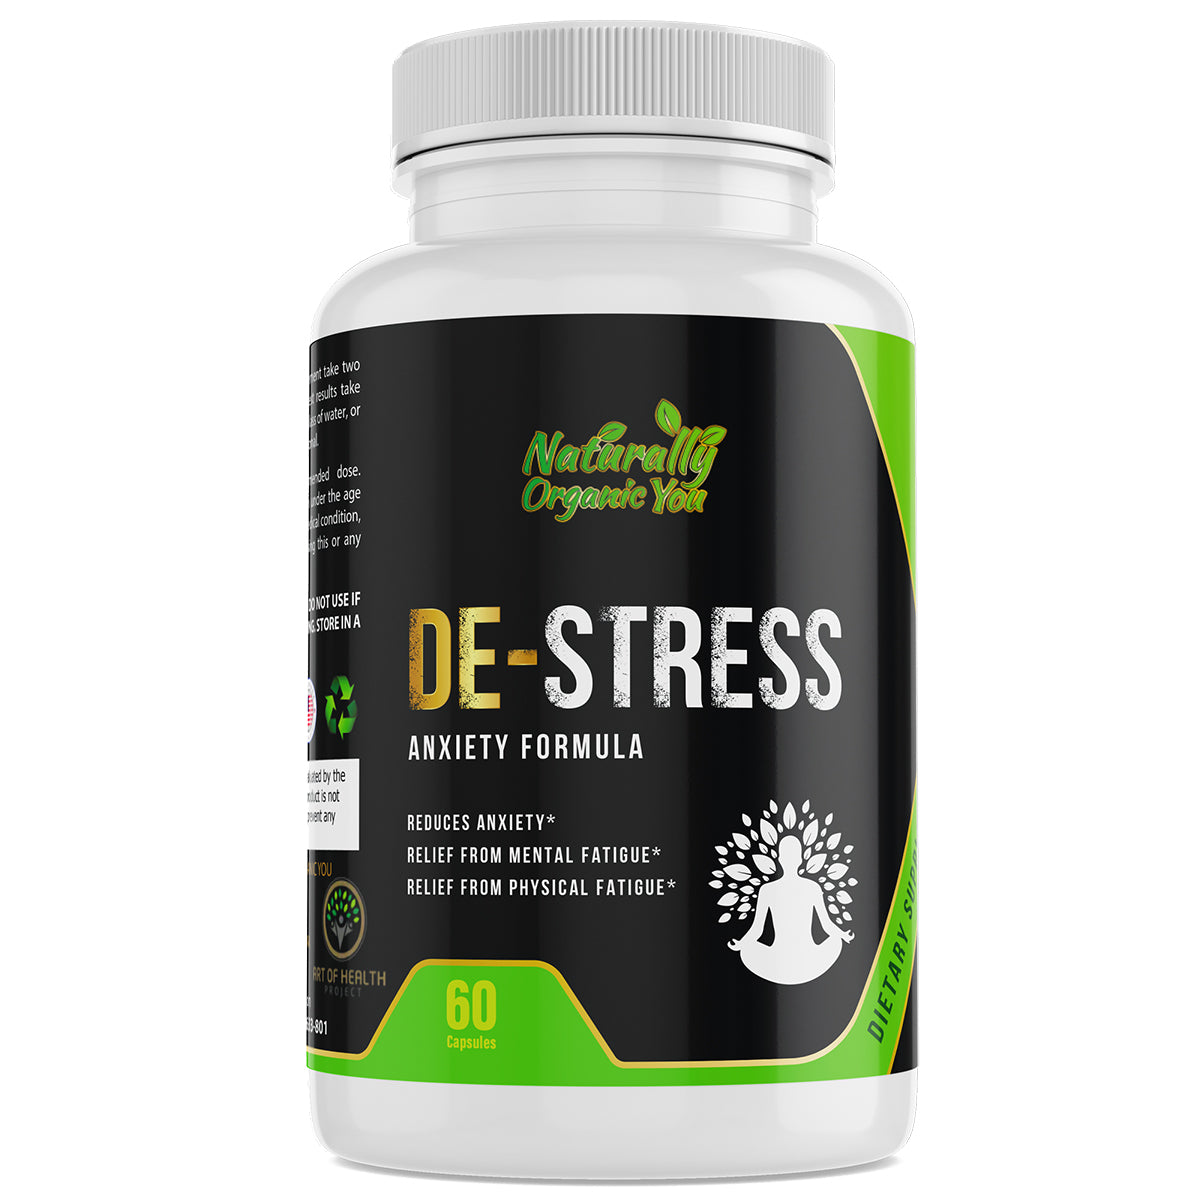 DE-STRESS (Anxiety Formula)